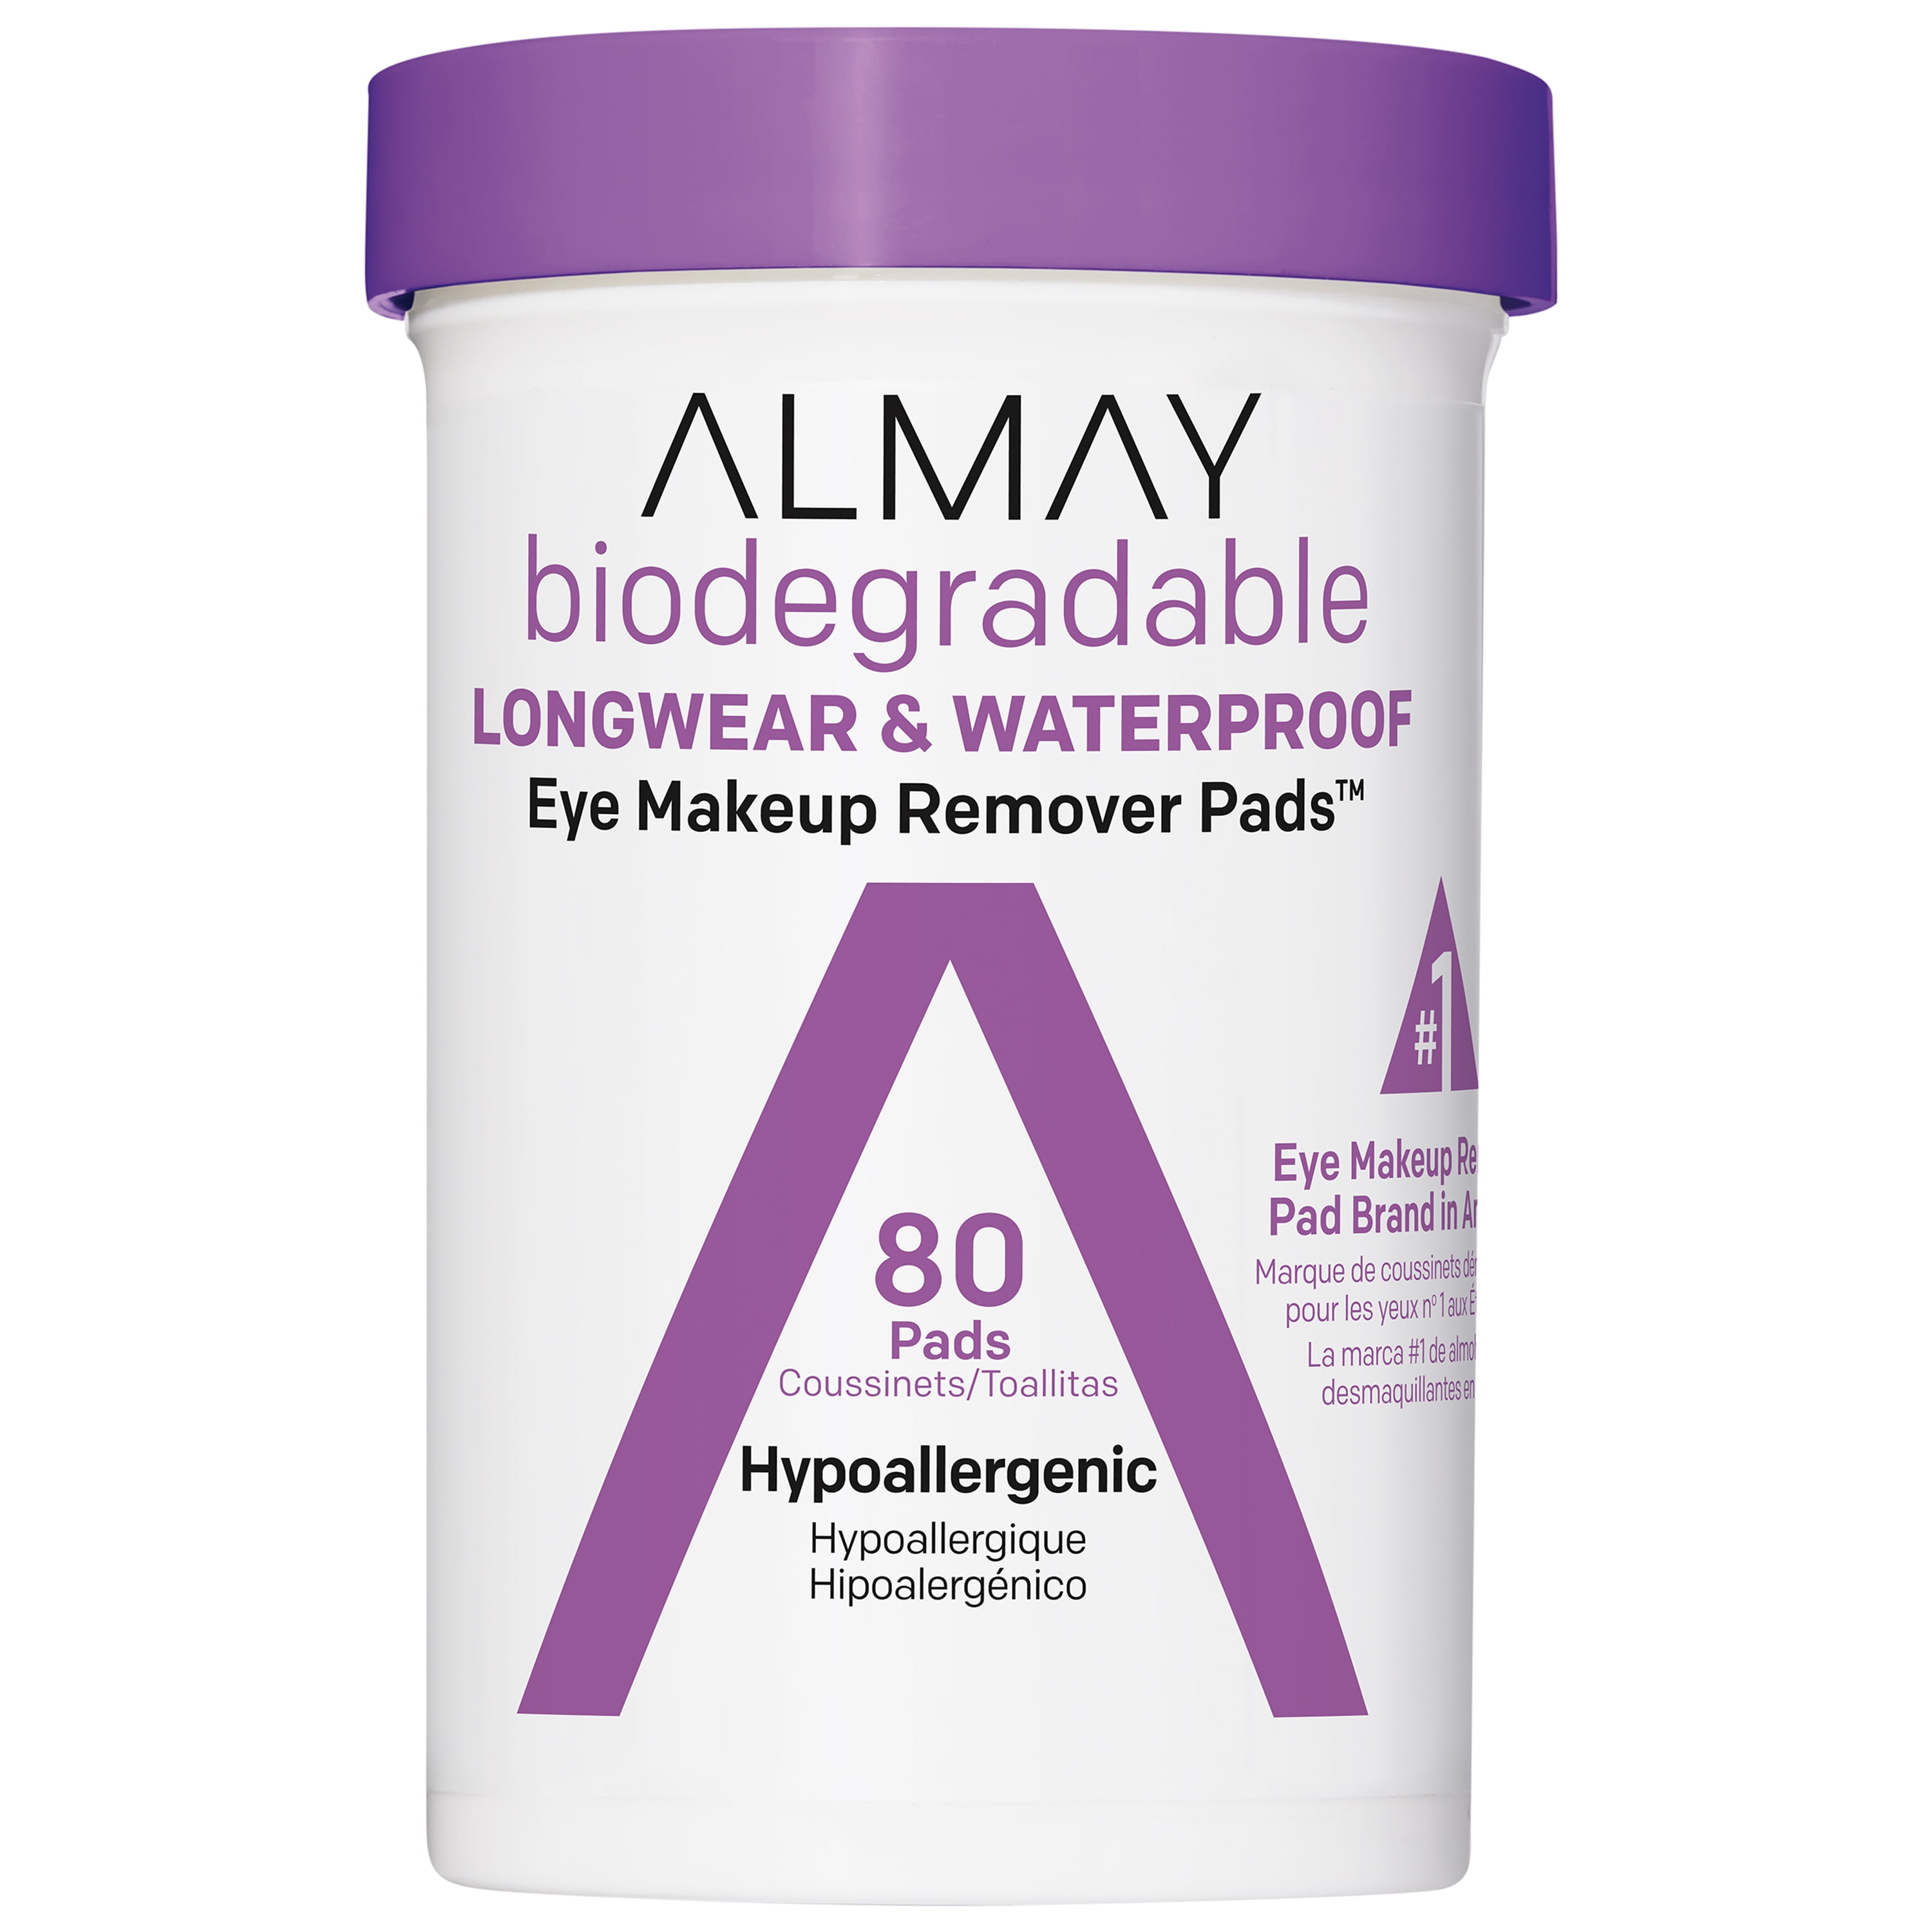 Almay Biodegradable Longwear & Waterproof Eye Makeup Remover Pads, Hypoallergenic, Cruelty-Free, Fragrance-Free, 80 Pads